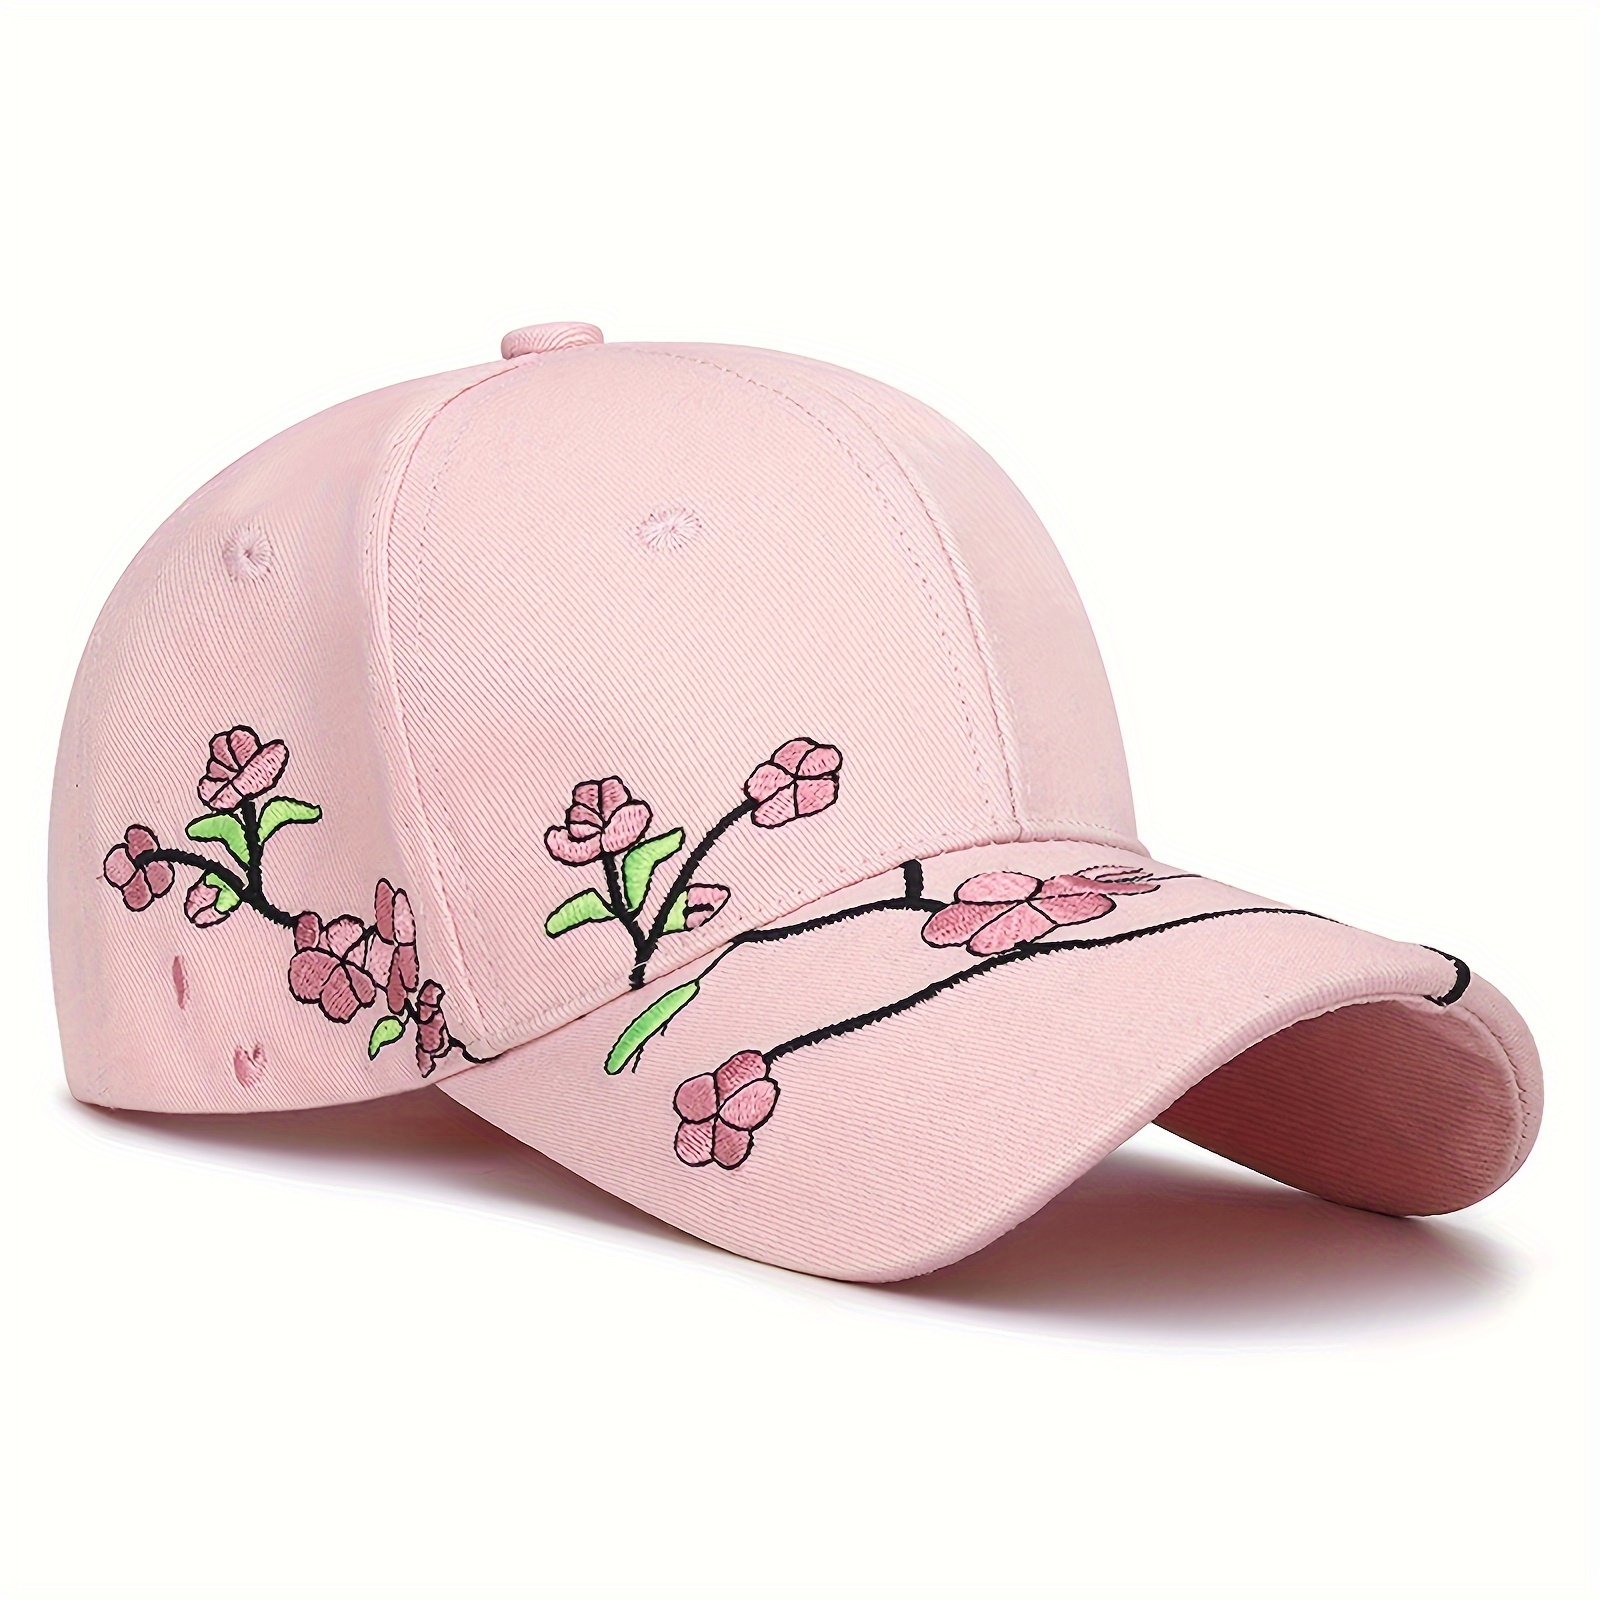 plum   embroidery baseball cap elegant flower solid color sports hat breathable adjustable dad hat for women girls details 2